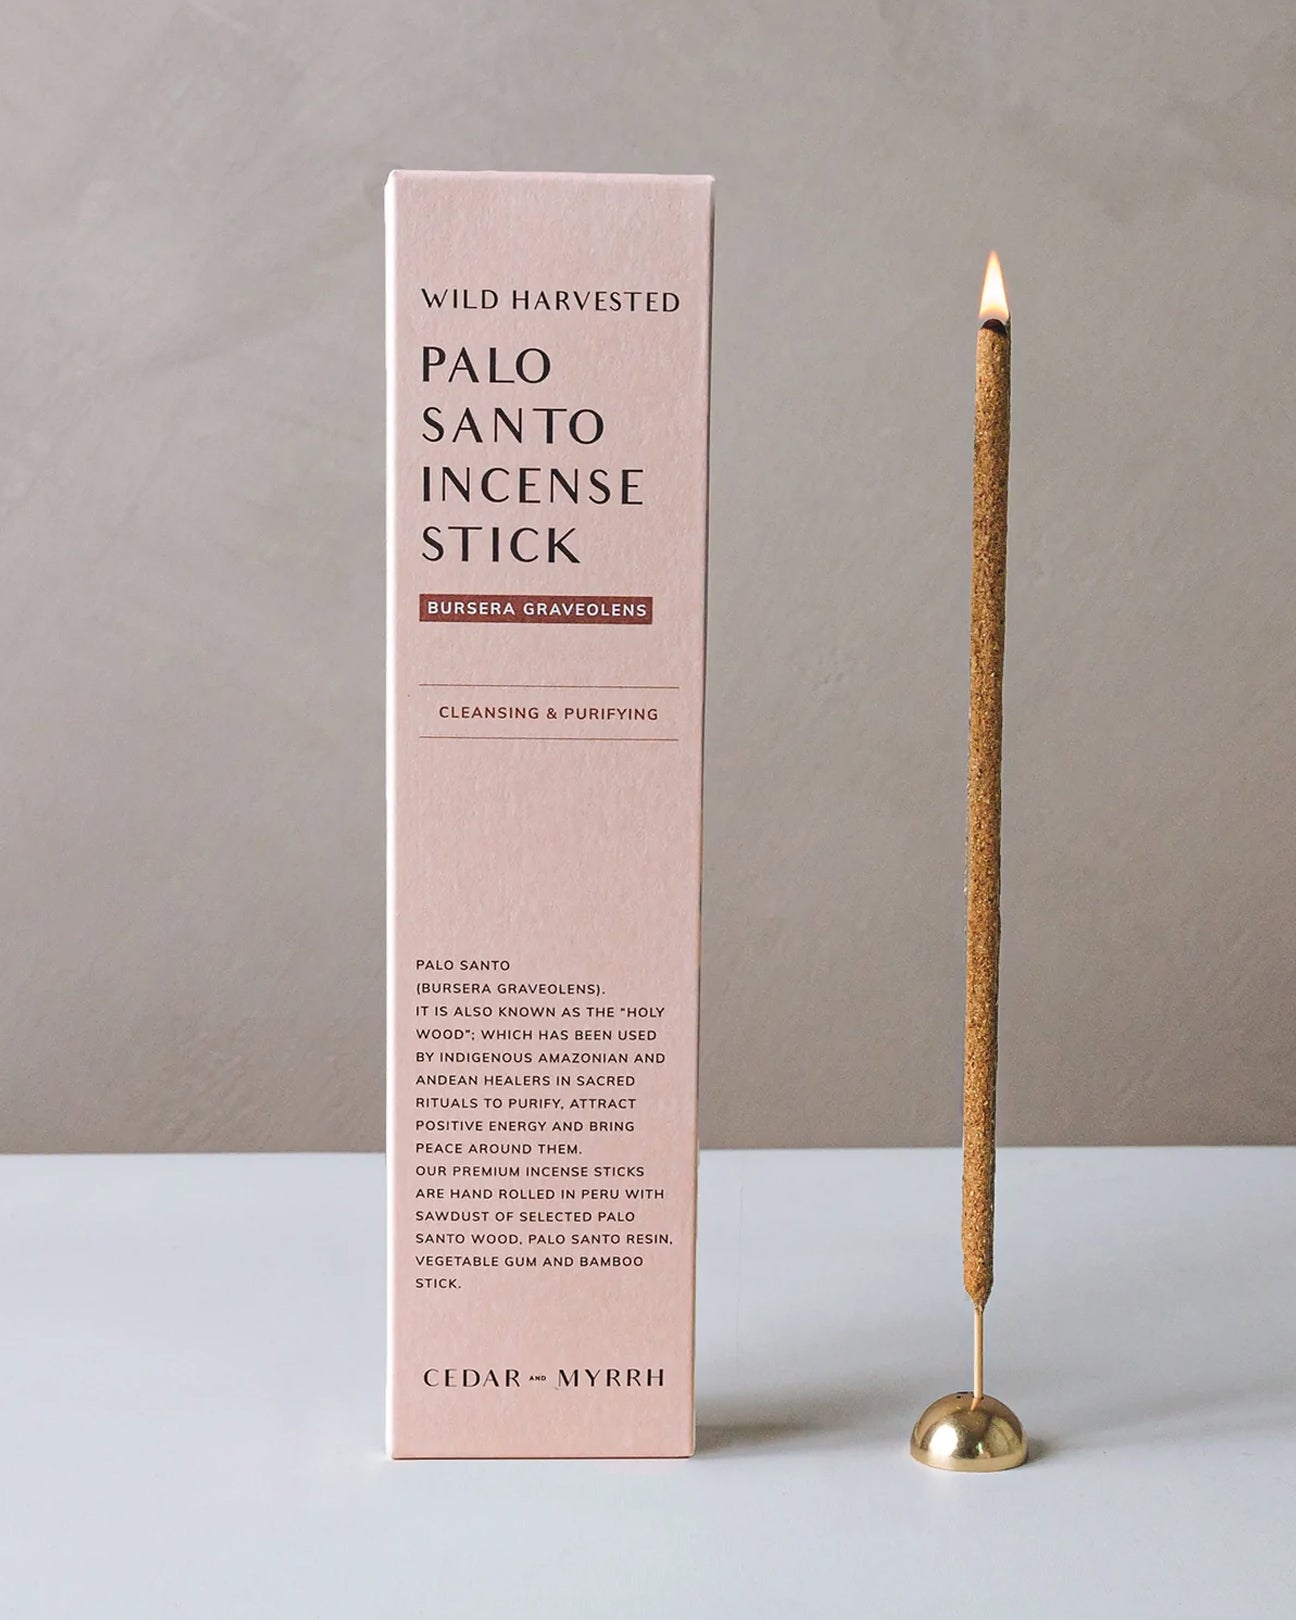 CEDAR AND MYRRH Palo Santo Incense Sticks